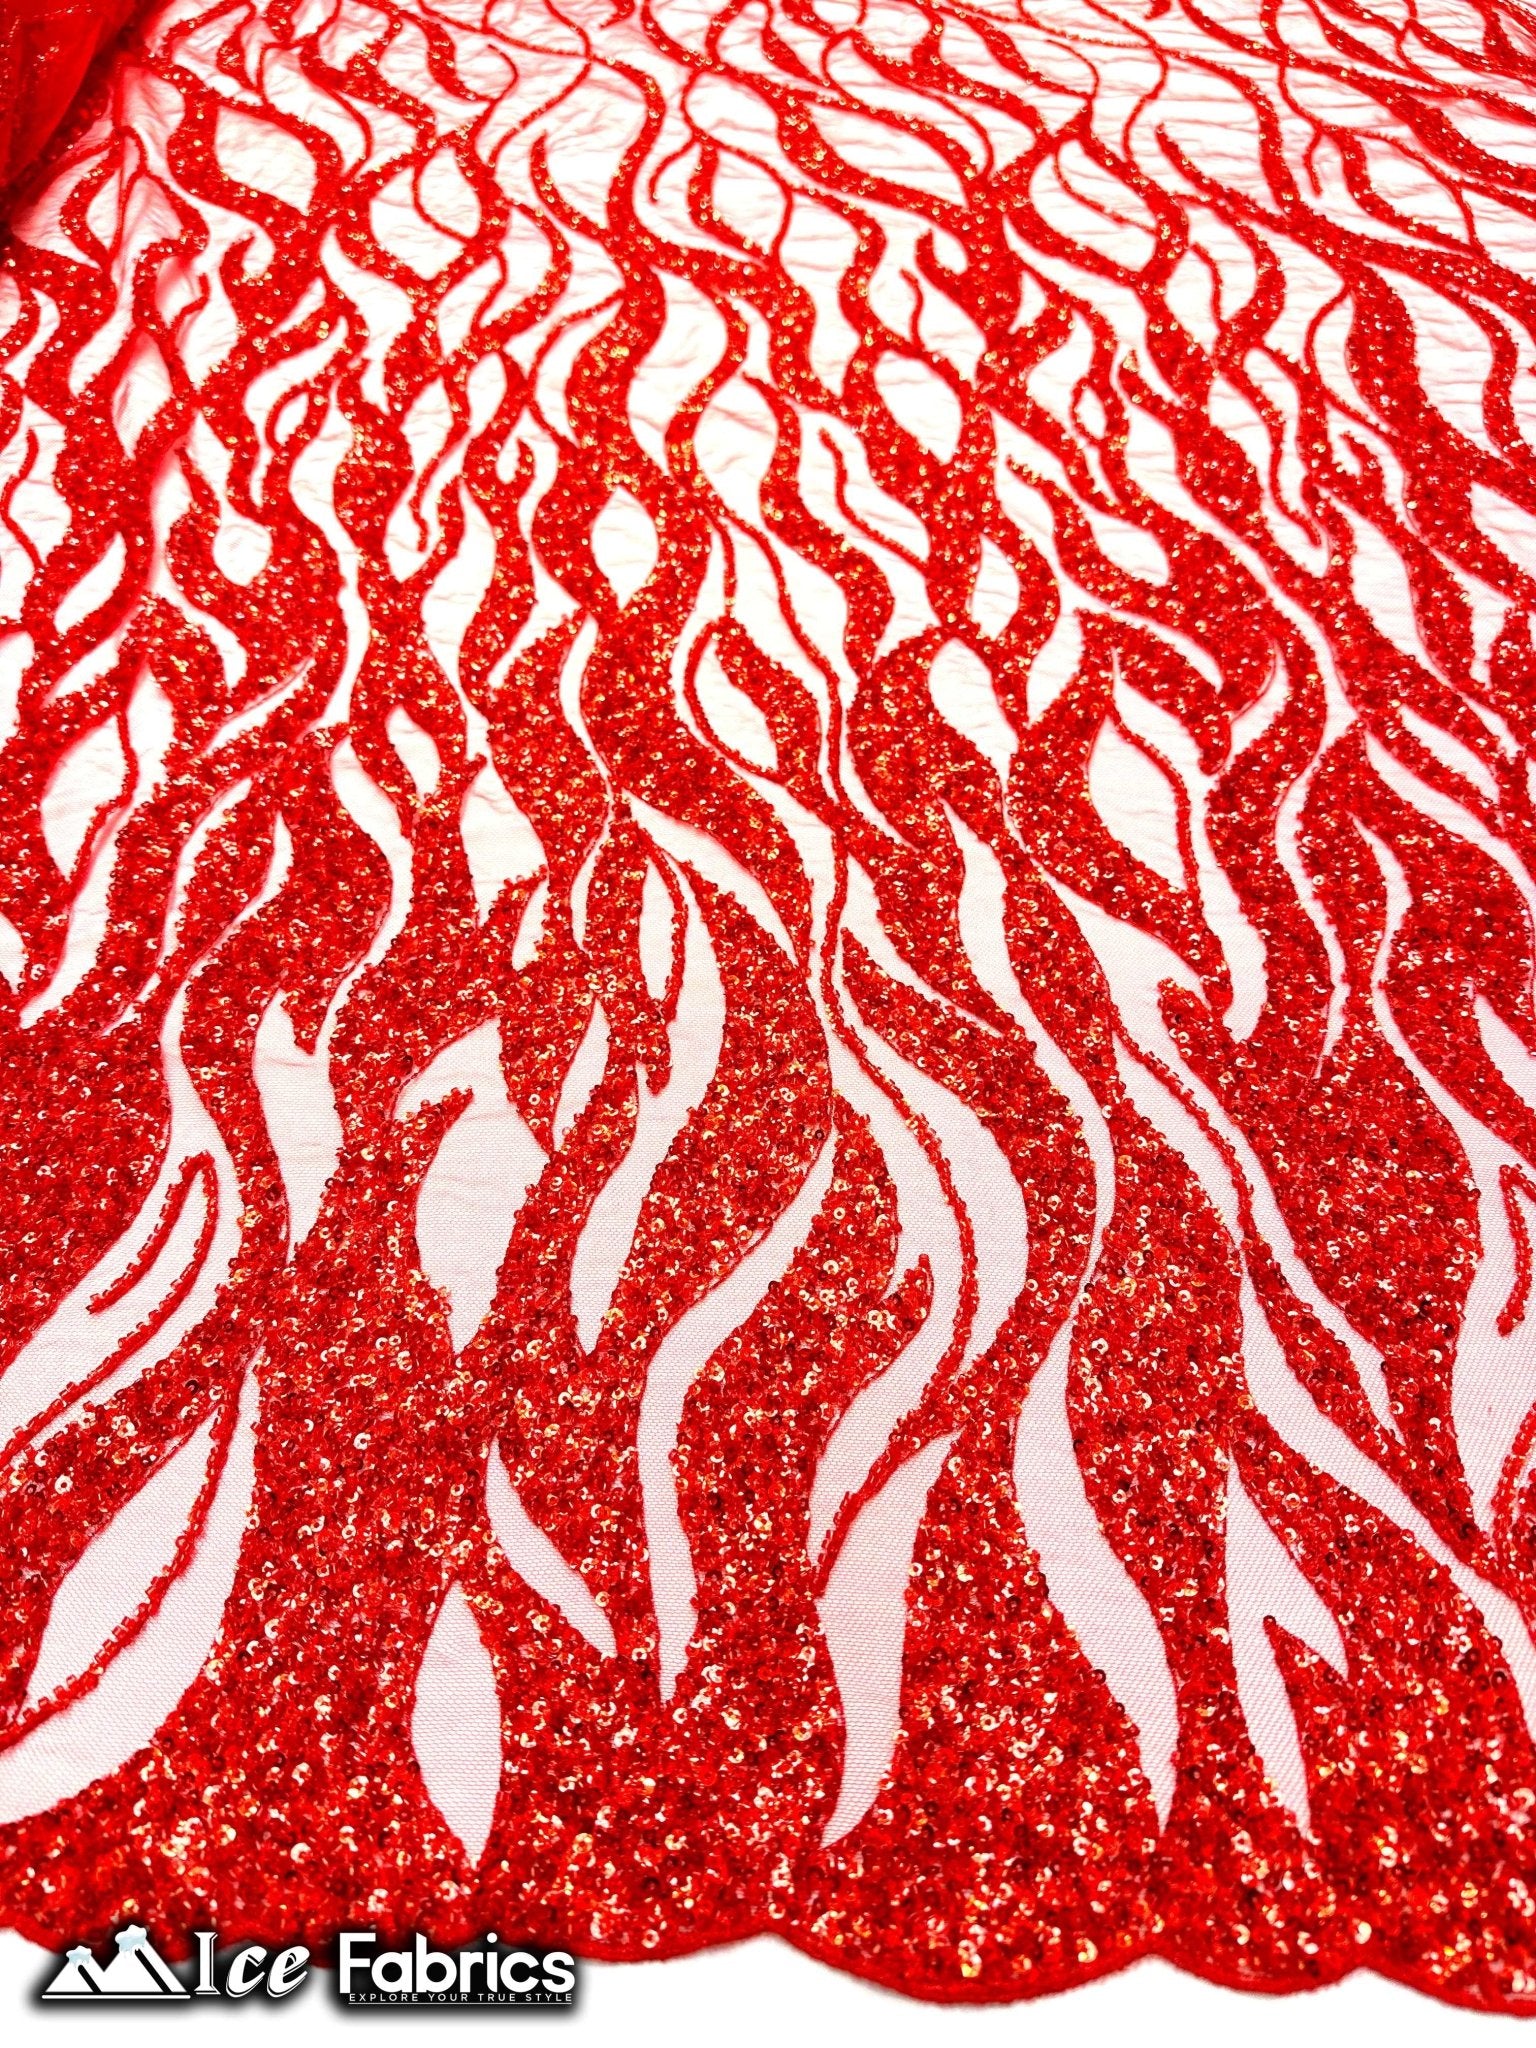 Elegant Heavy Beaded Fabric Lace Fabric with SequinICE FABRICSICE FABRICSOff WhiteBy The Yard (54" Wide)Elegant Heavy Beaded Fabric Lace Fabric with Sequin ICE FABRICS Red